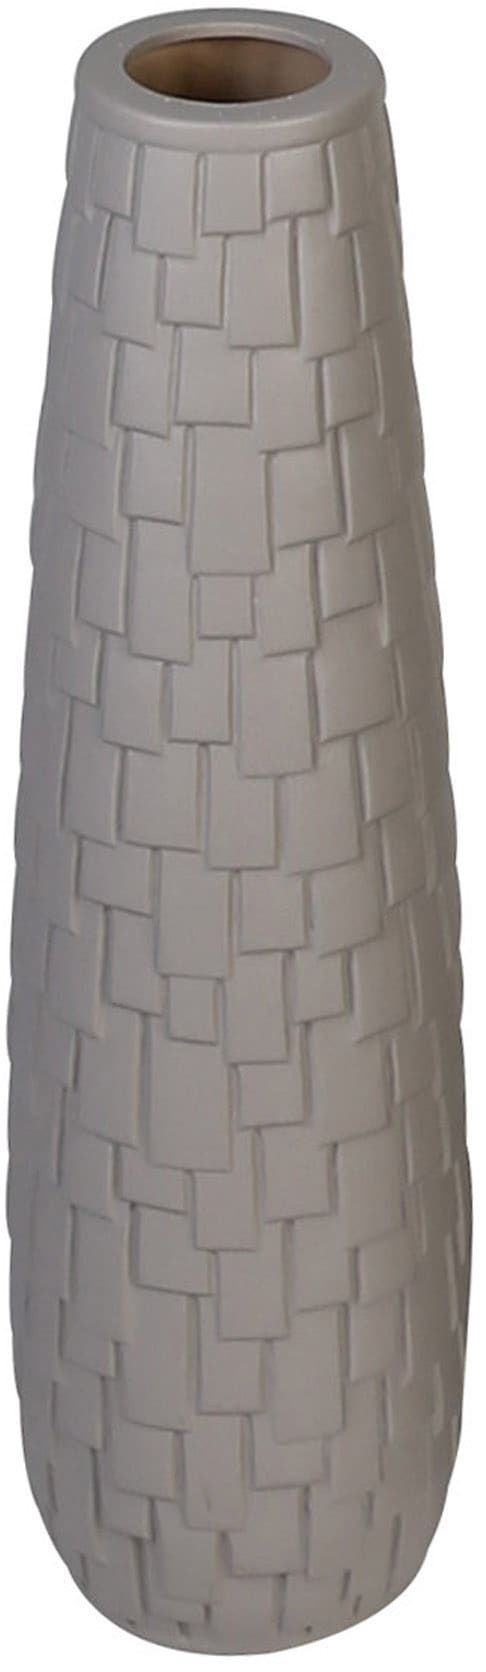 GILDE Bodenvase »Brick«, (1 St.), Keramik, matt, dekorative  Riemchen-Struktur, 57 cm hoch bequem bestellen